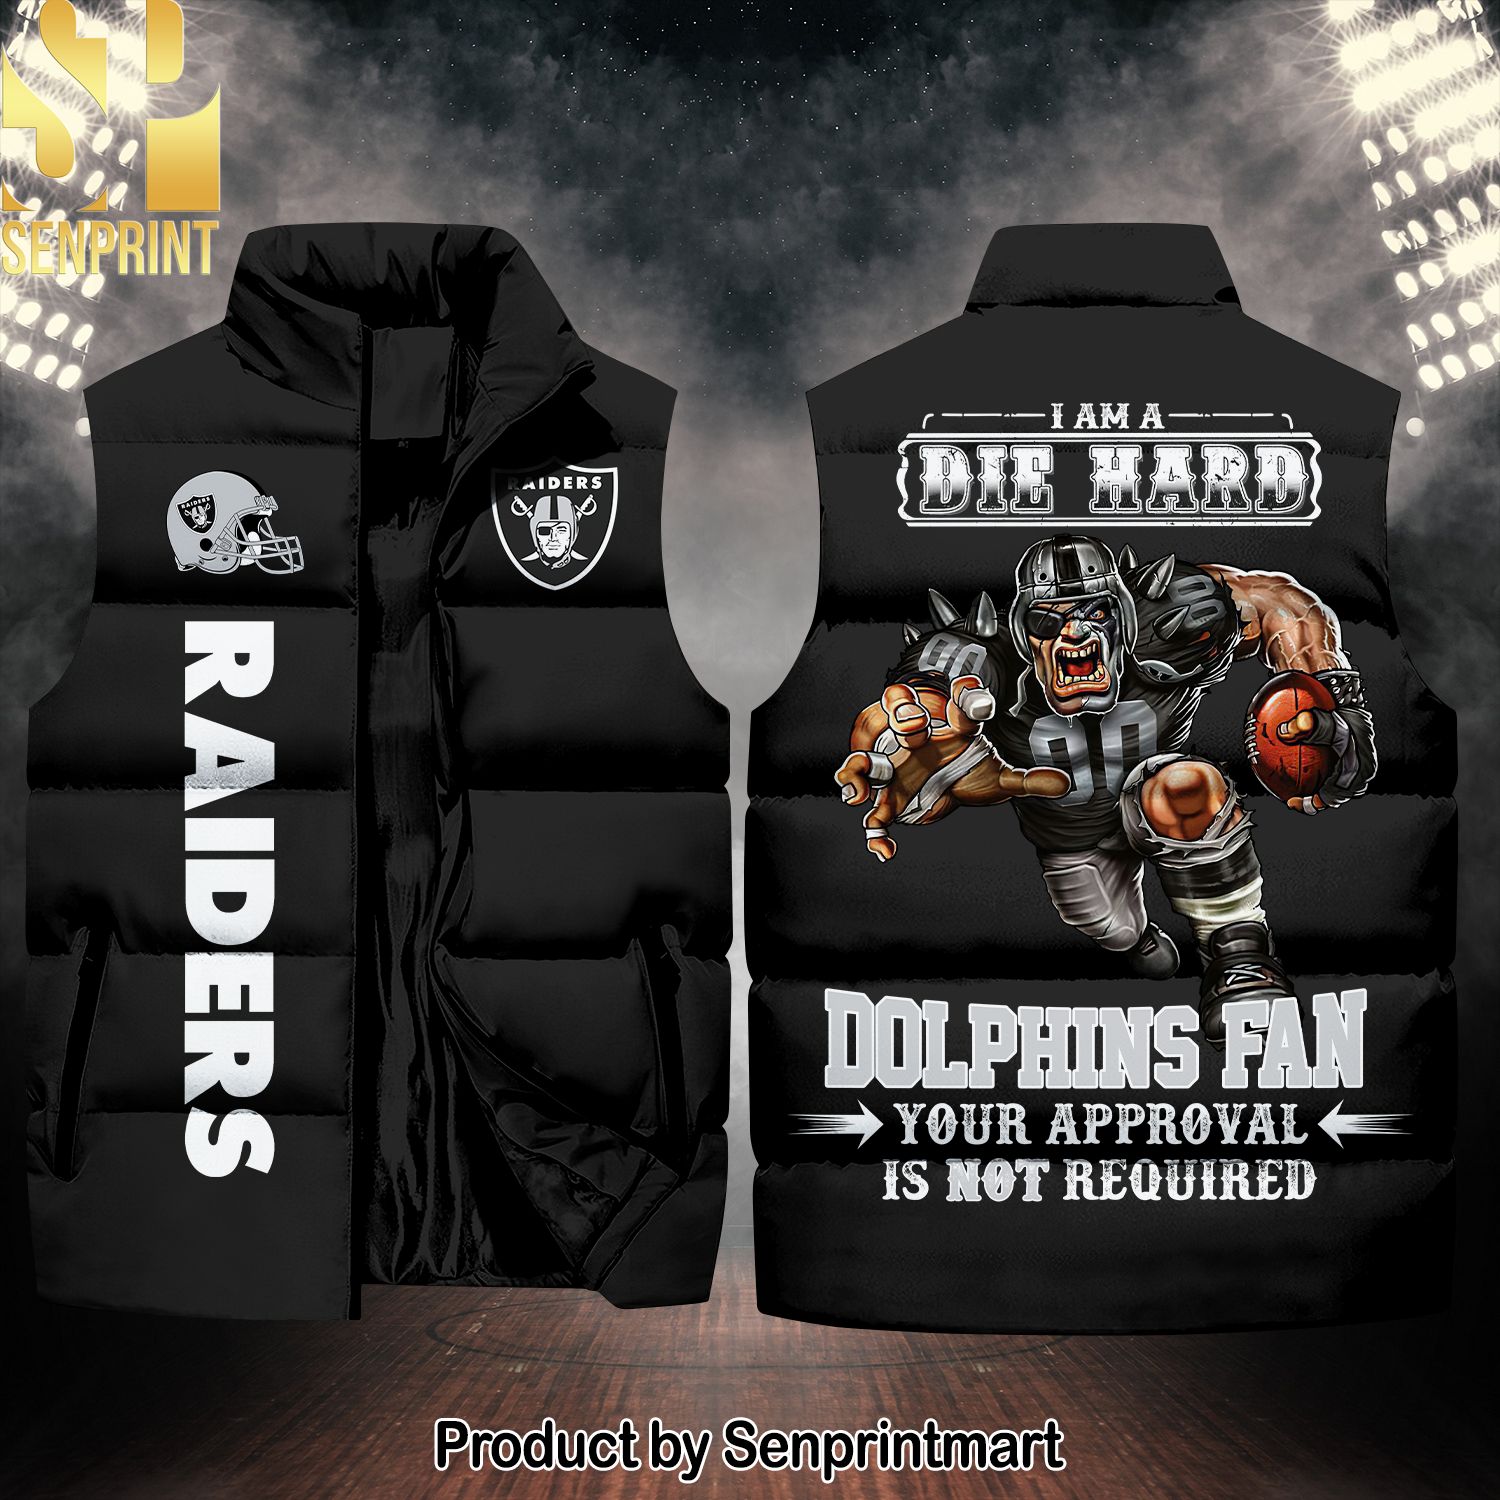 National Football League Las Vegas Raiders Die Hard Fan High Fashion Sleeveless Jacket